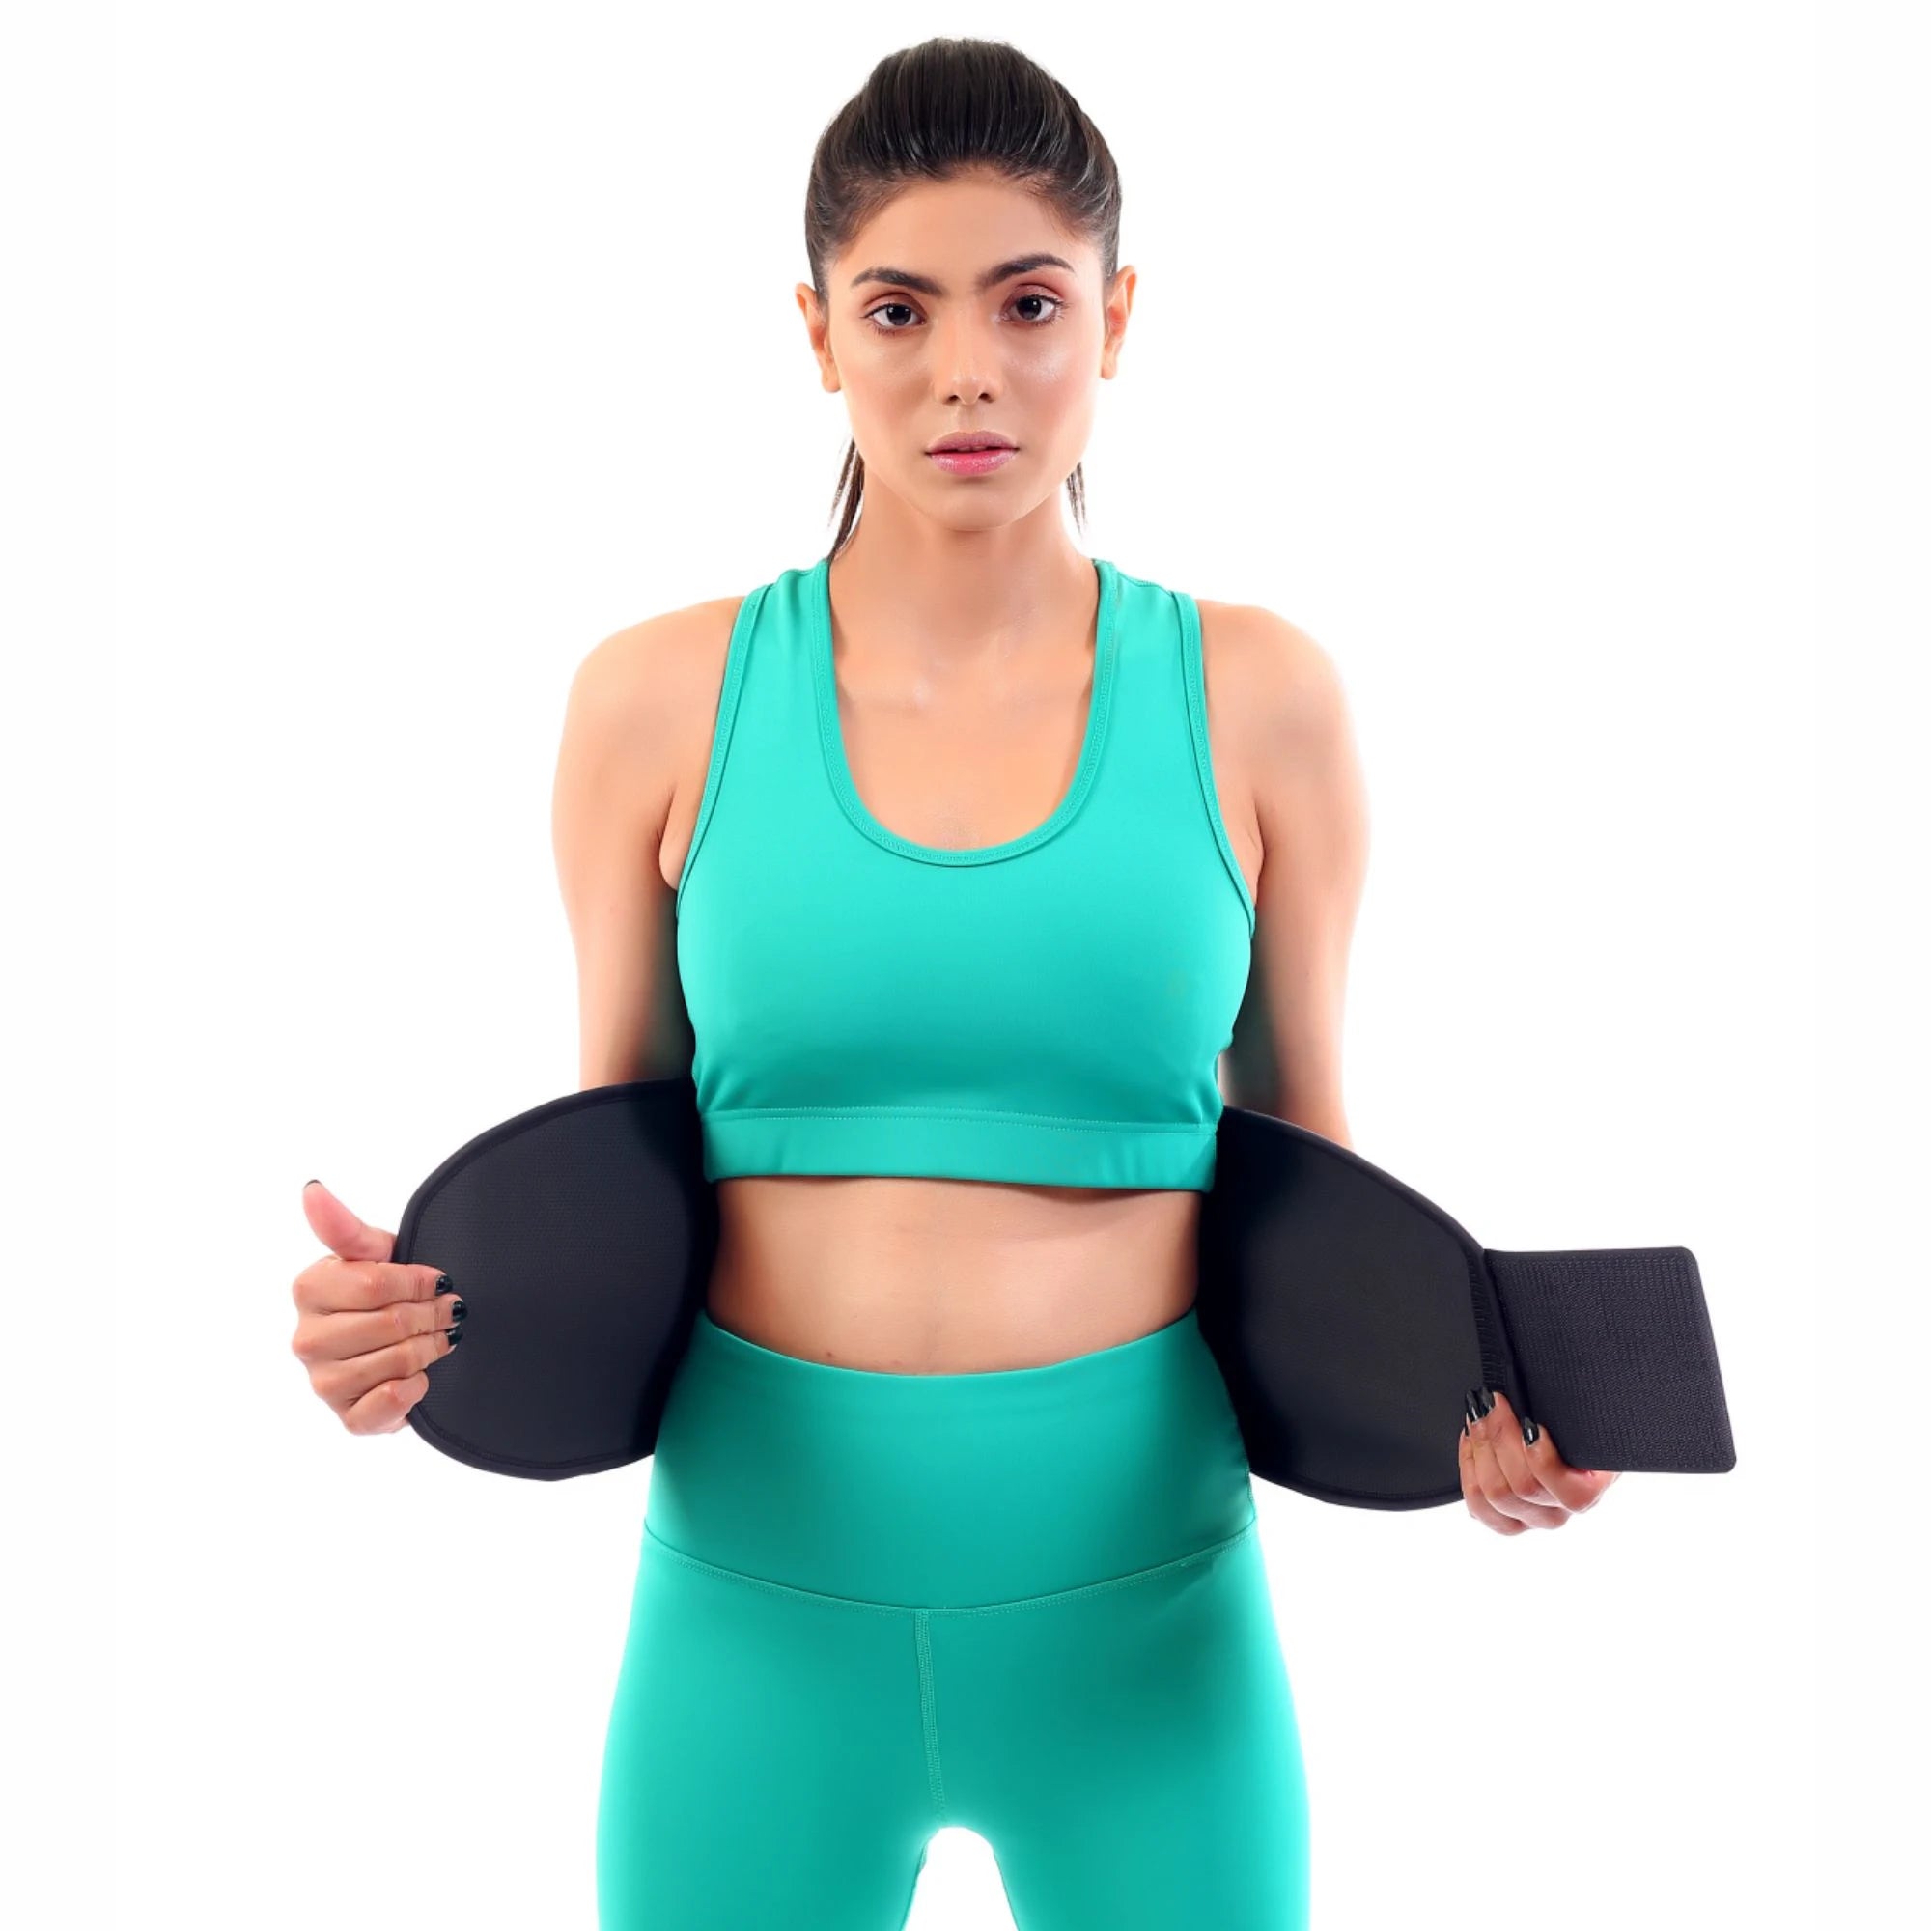 Sweet Sweat Premium Waist Trimmer Men Women Belt Slimmer Exercise Ab Waist  Wrap - Medium - Sale price - Buy online in Pakistan 